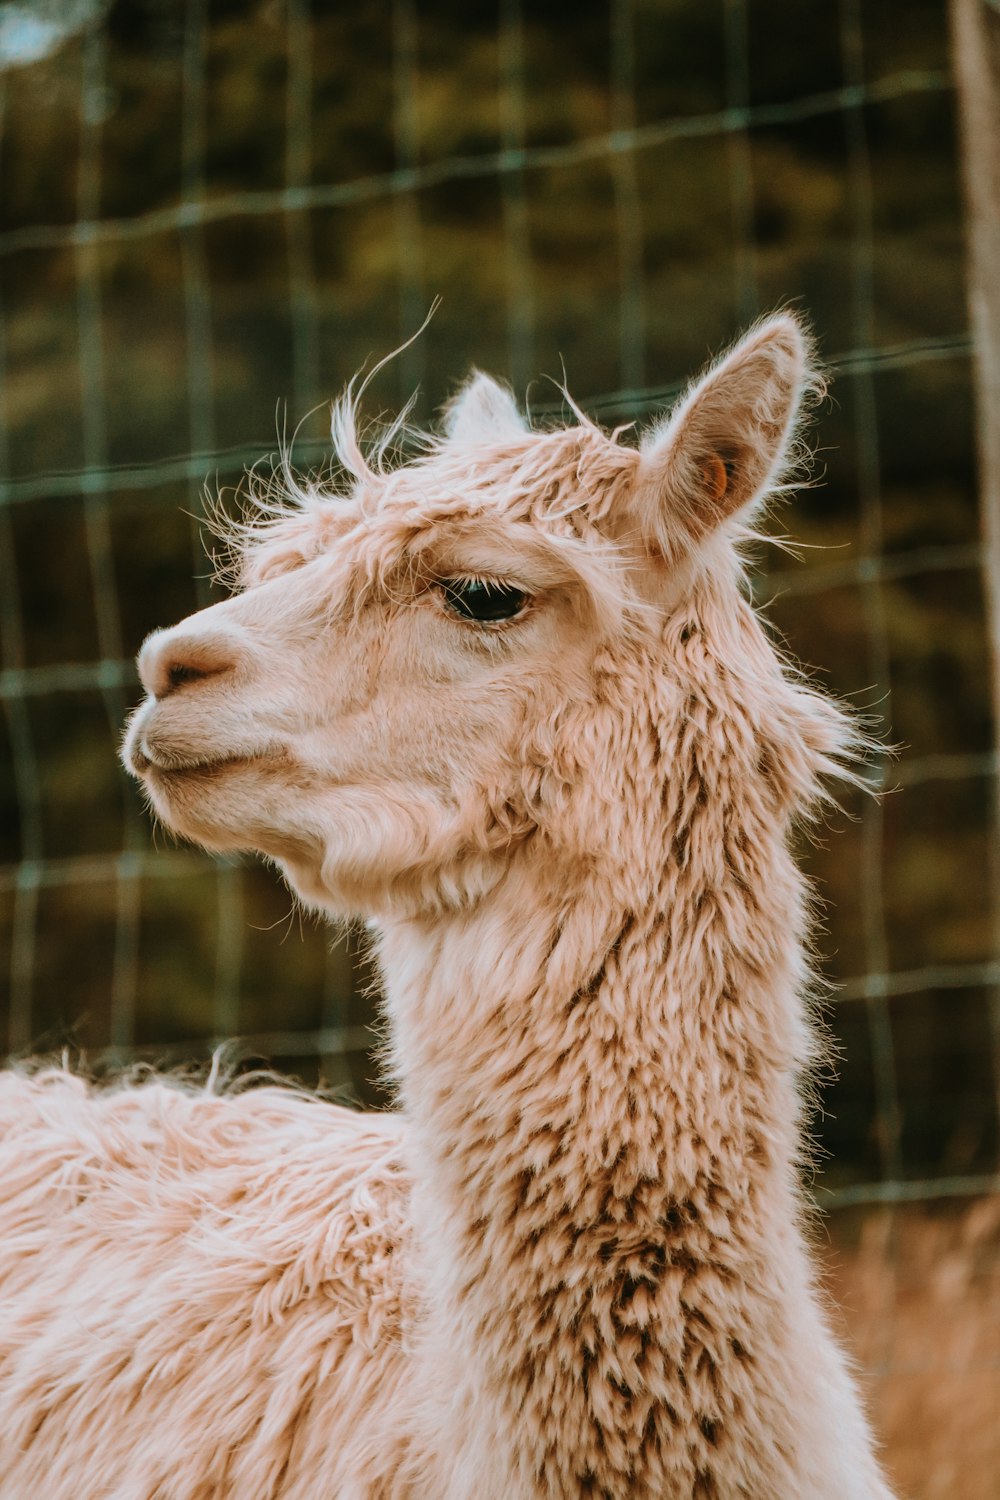 a close up of a llama near a wire fence